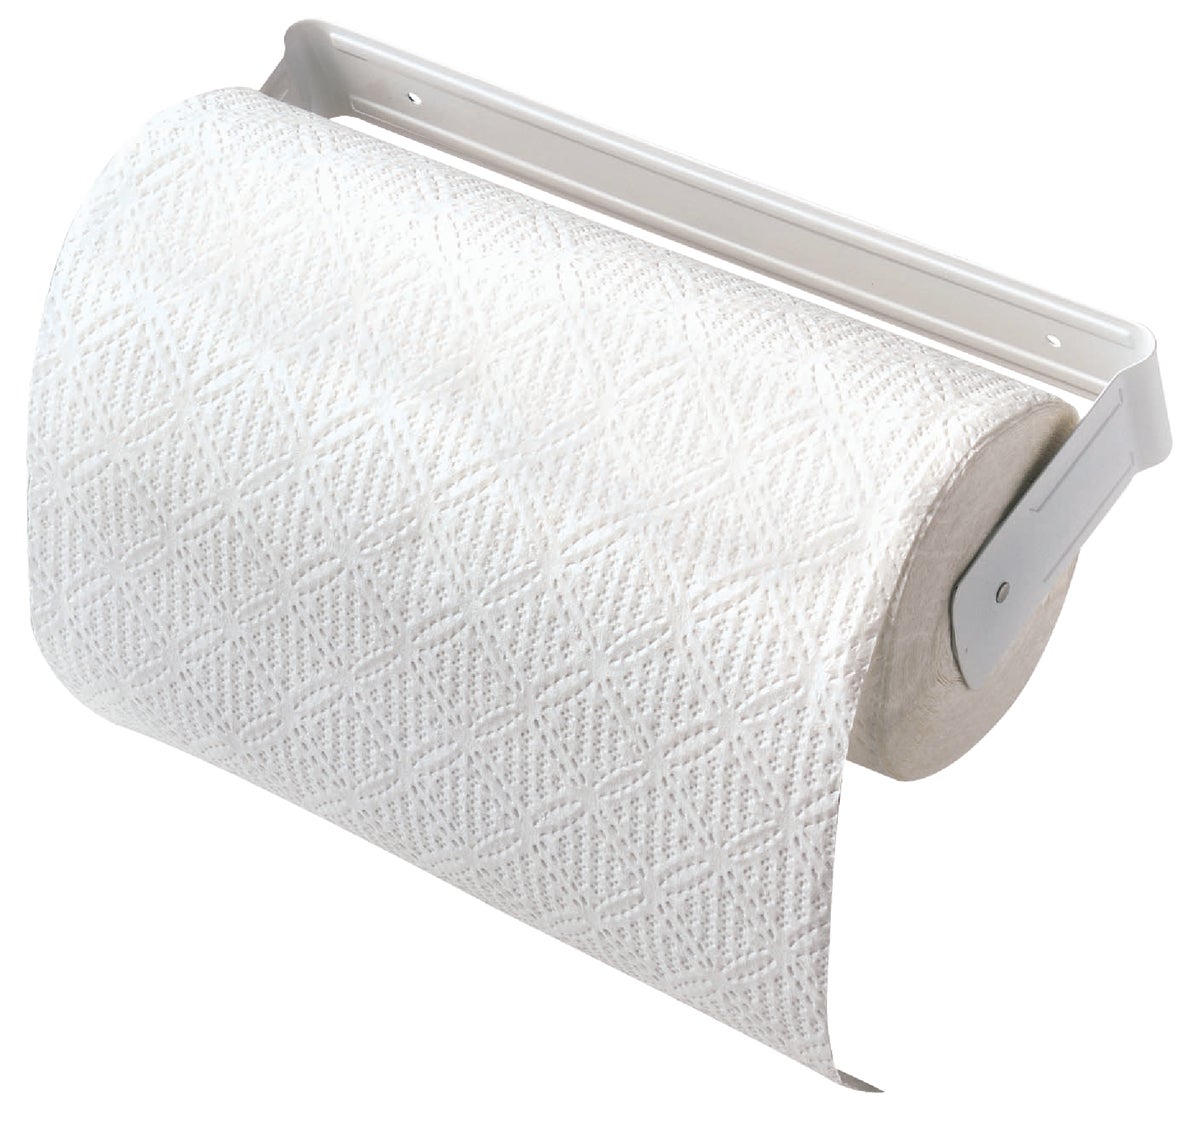 Decko Chrome Metal Paper Towel Holder